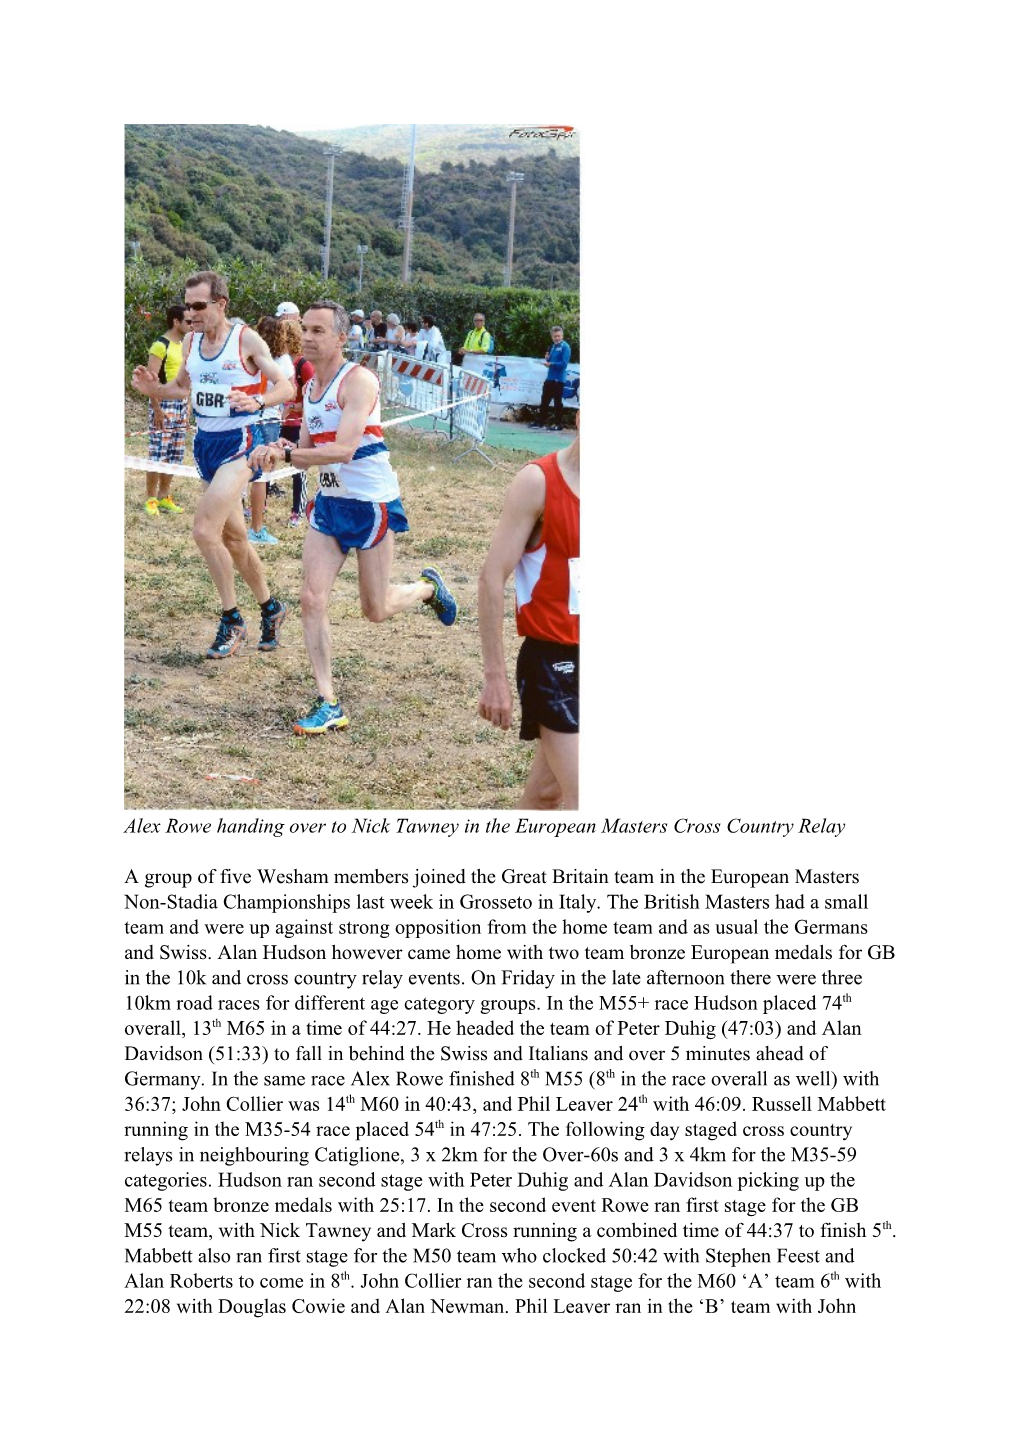 Simon Eaton Was the Only Wesham Runner in the Brathay Marathon on Sunday, Clocking 3:26:59